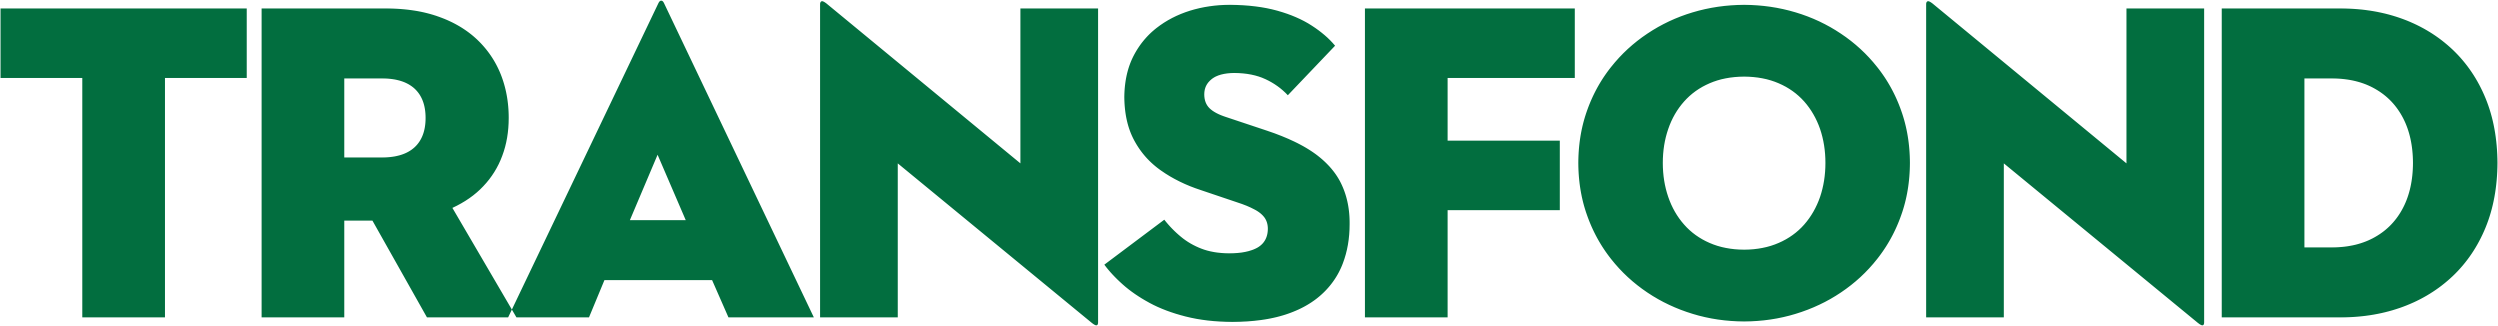 Transfond logo